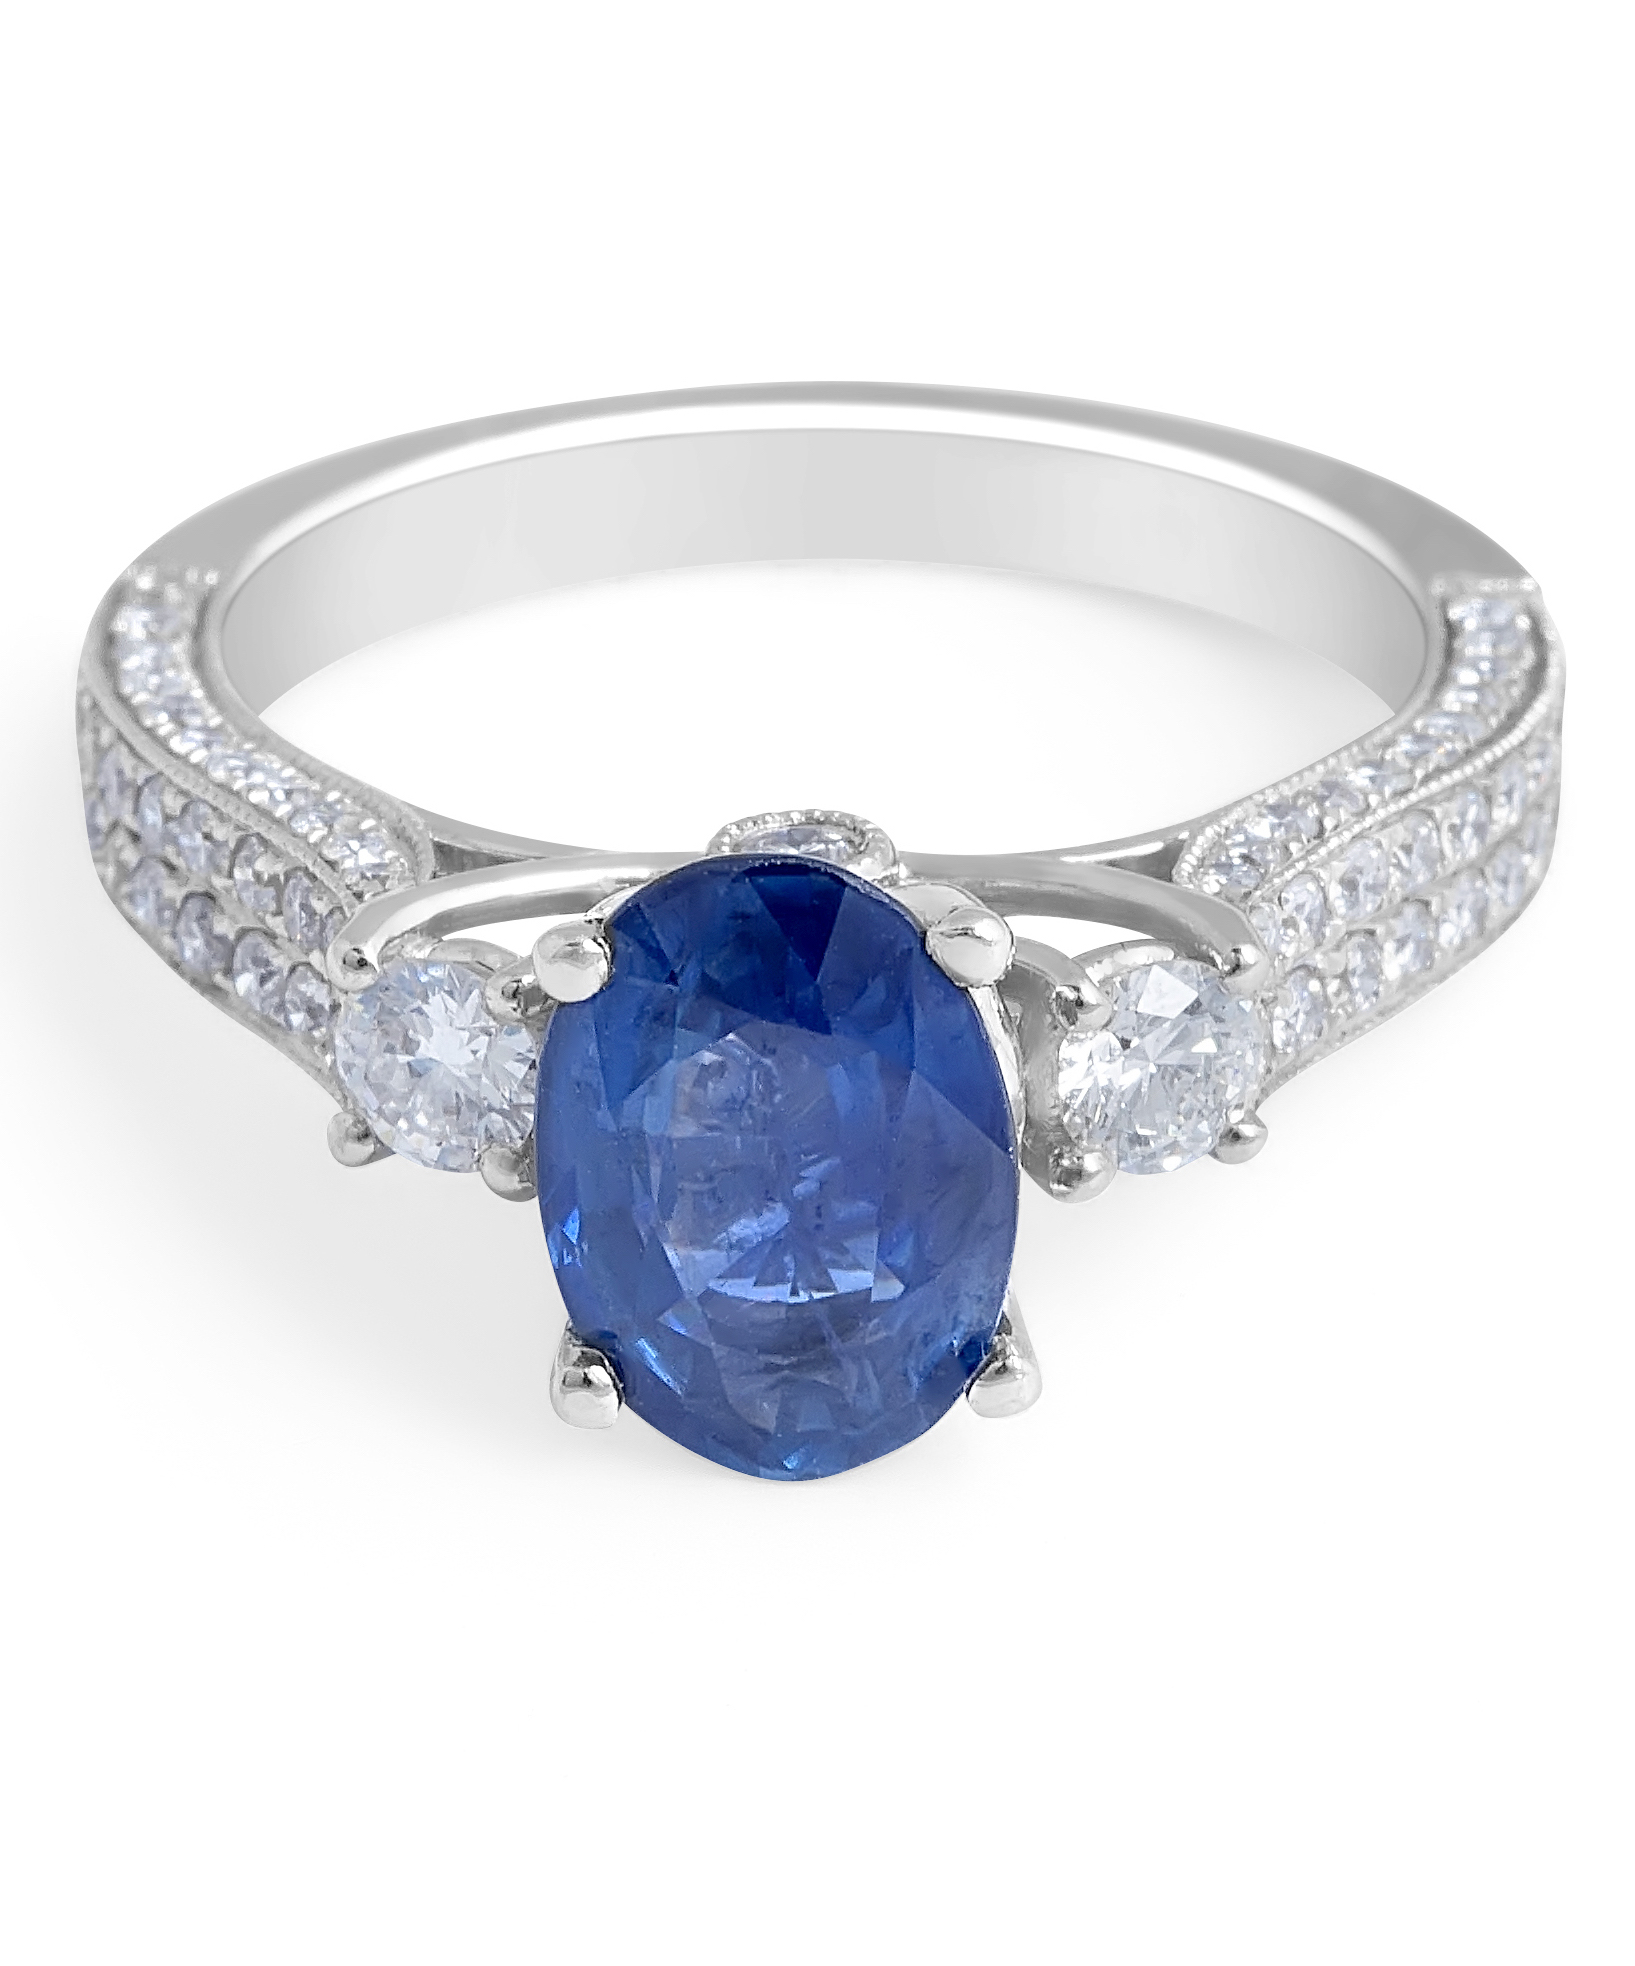 Blue Sapphire Diamond Engagement Ring in 18 Karat White Gold - Diamond rings